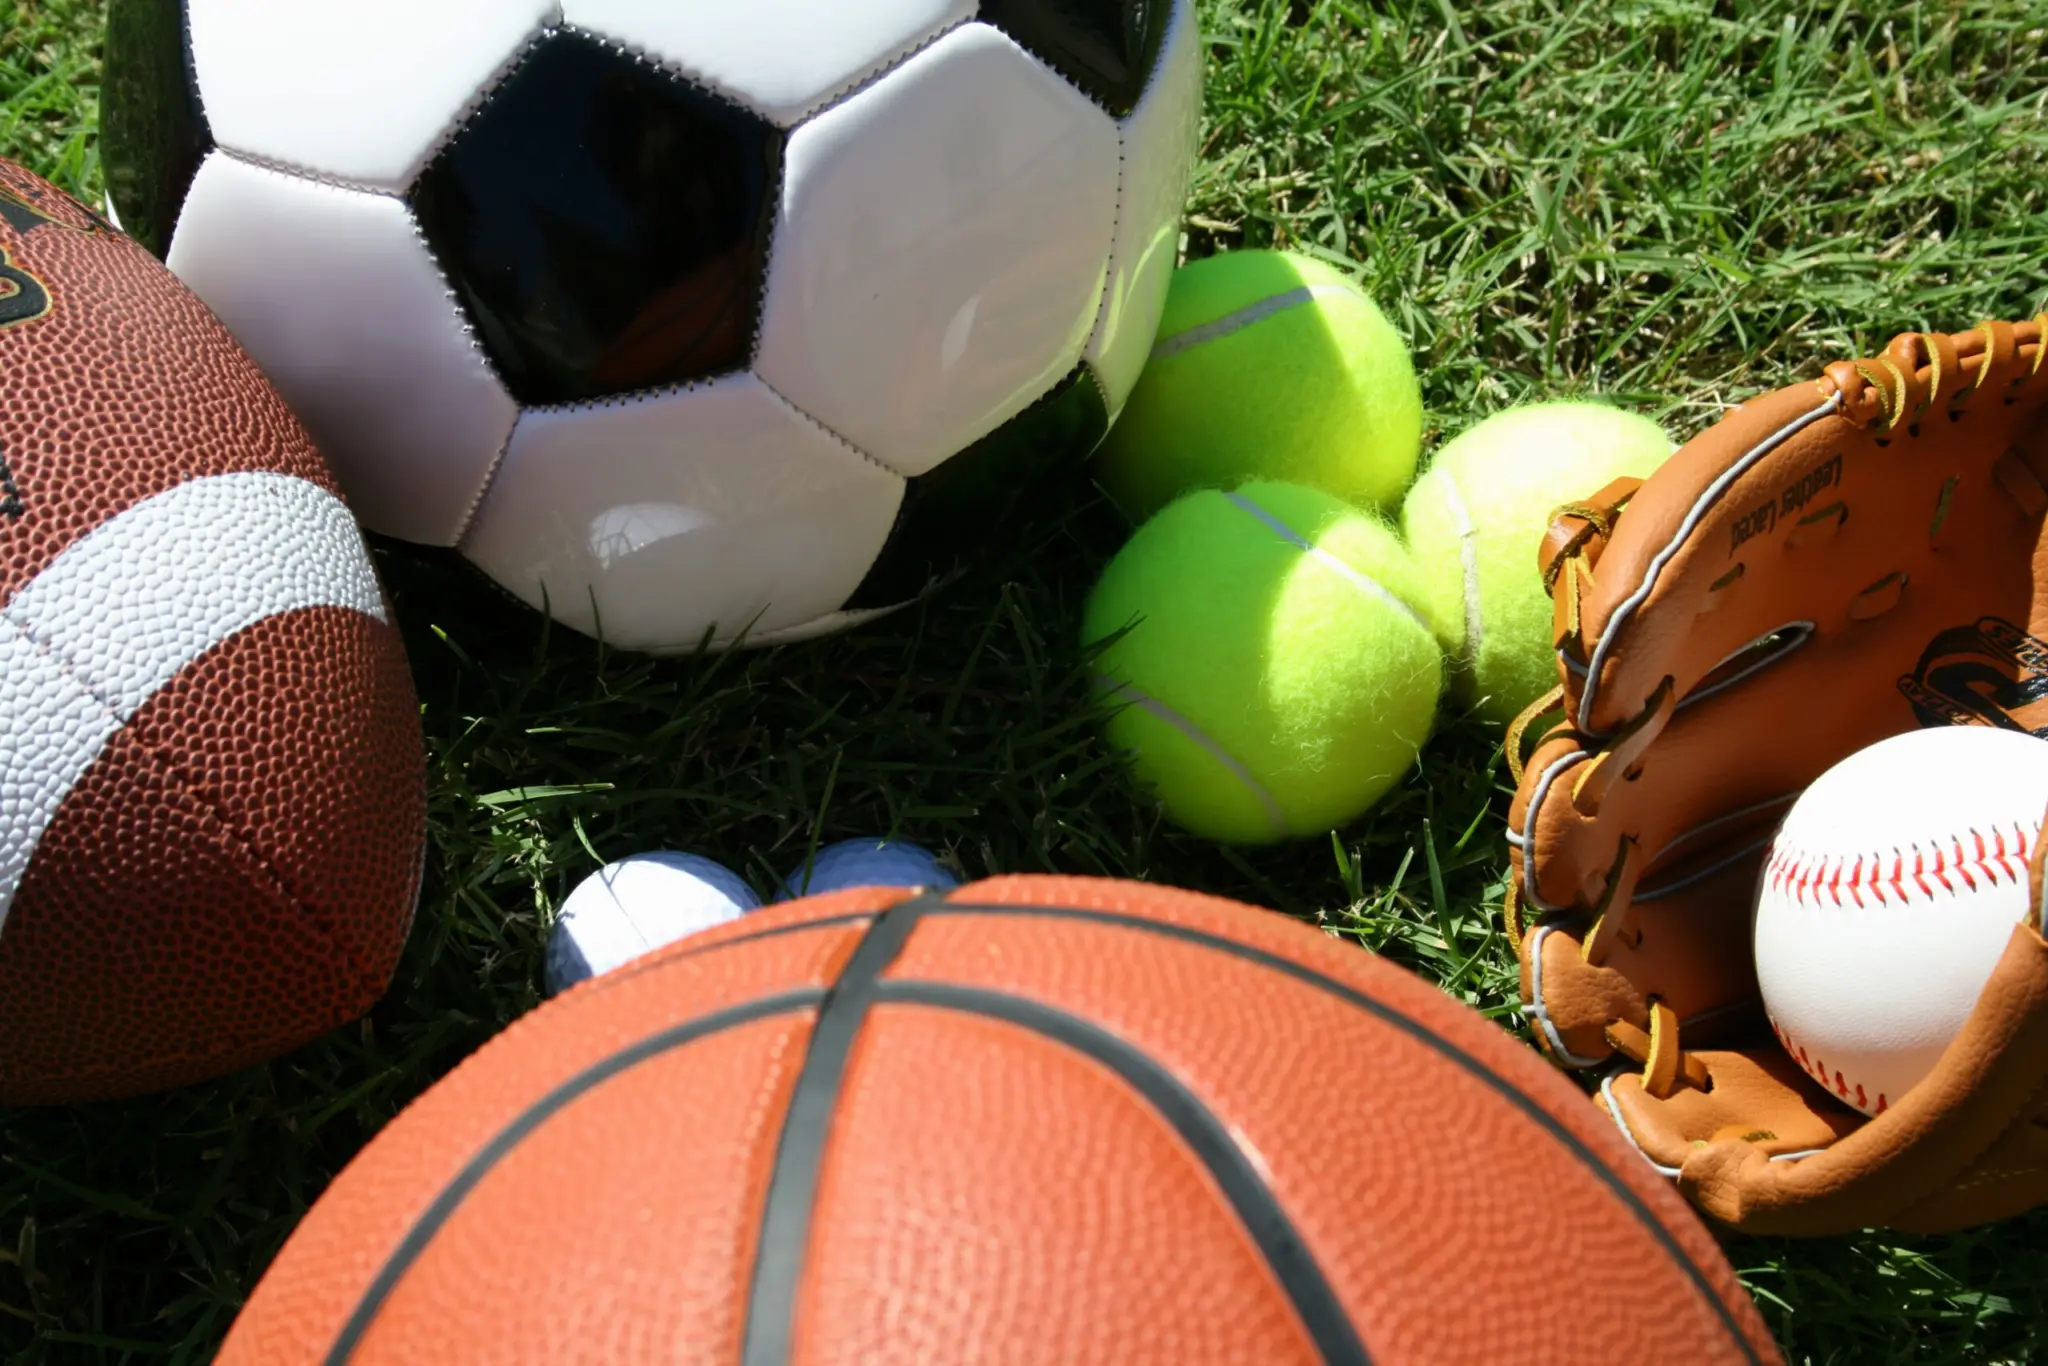 A football, soccer ball, basketball, three tennis balls, two golf balls, and a baseball in a leather baseball glove on grass.